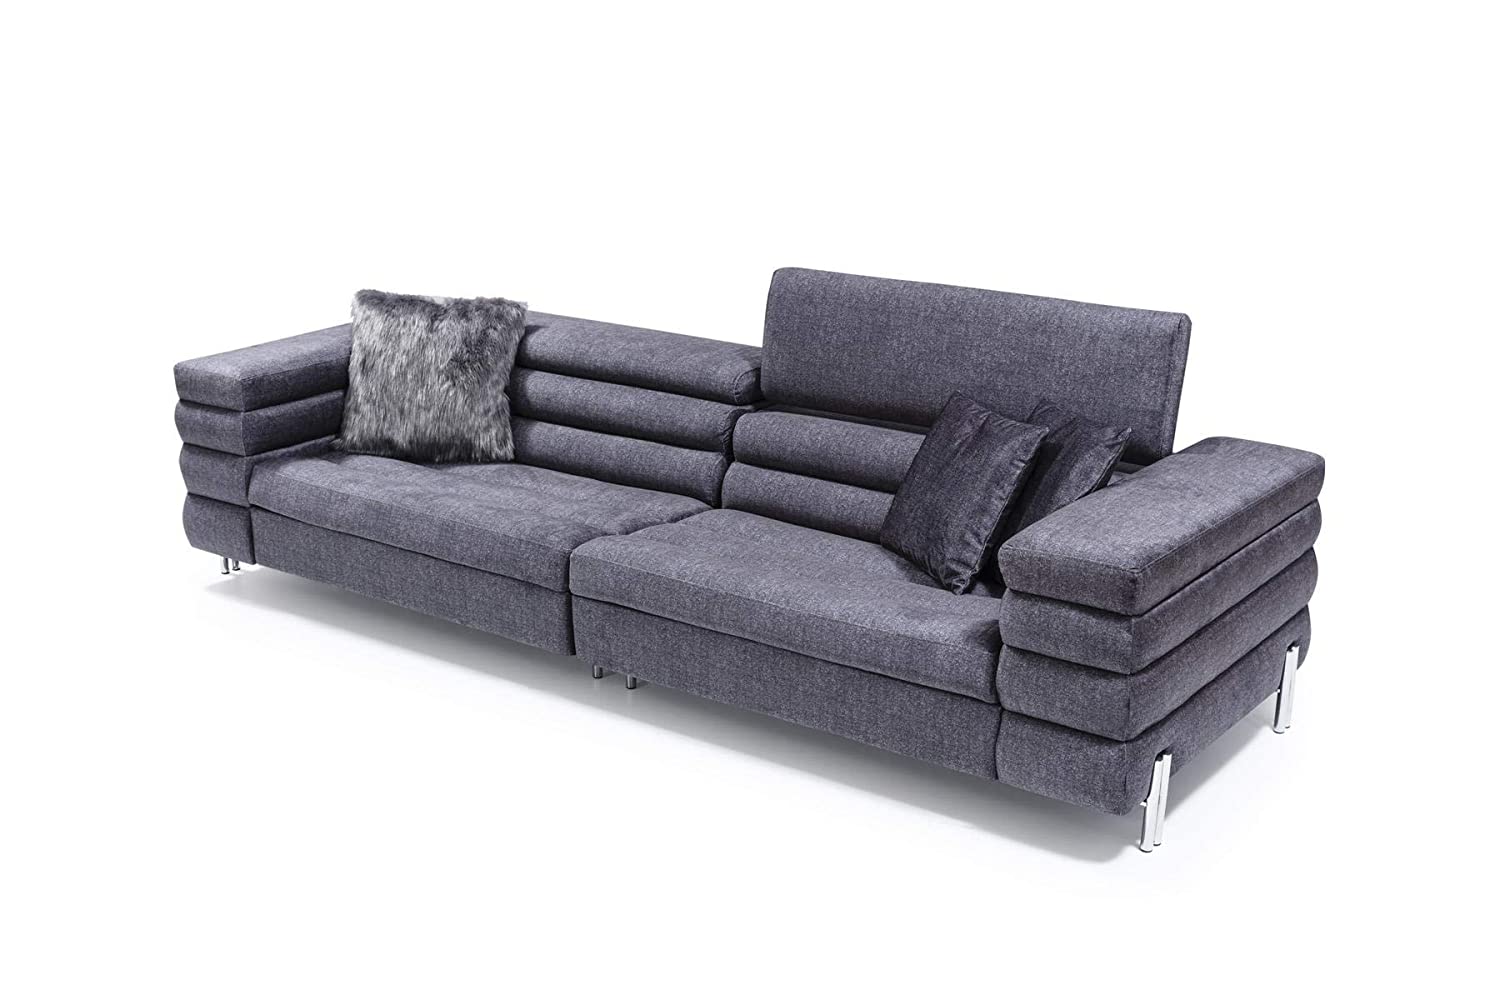 Designer Sofa Set:- 4 Seater Fabric Luxury Furniture Sofa Set (Dark Grey)